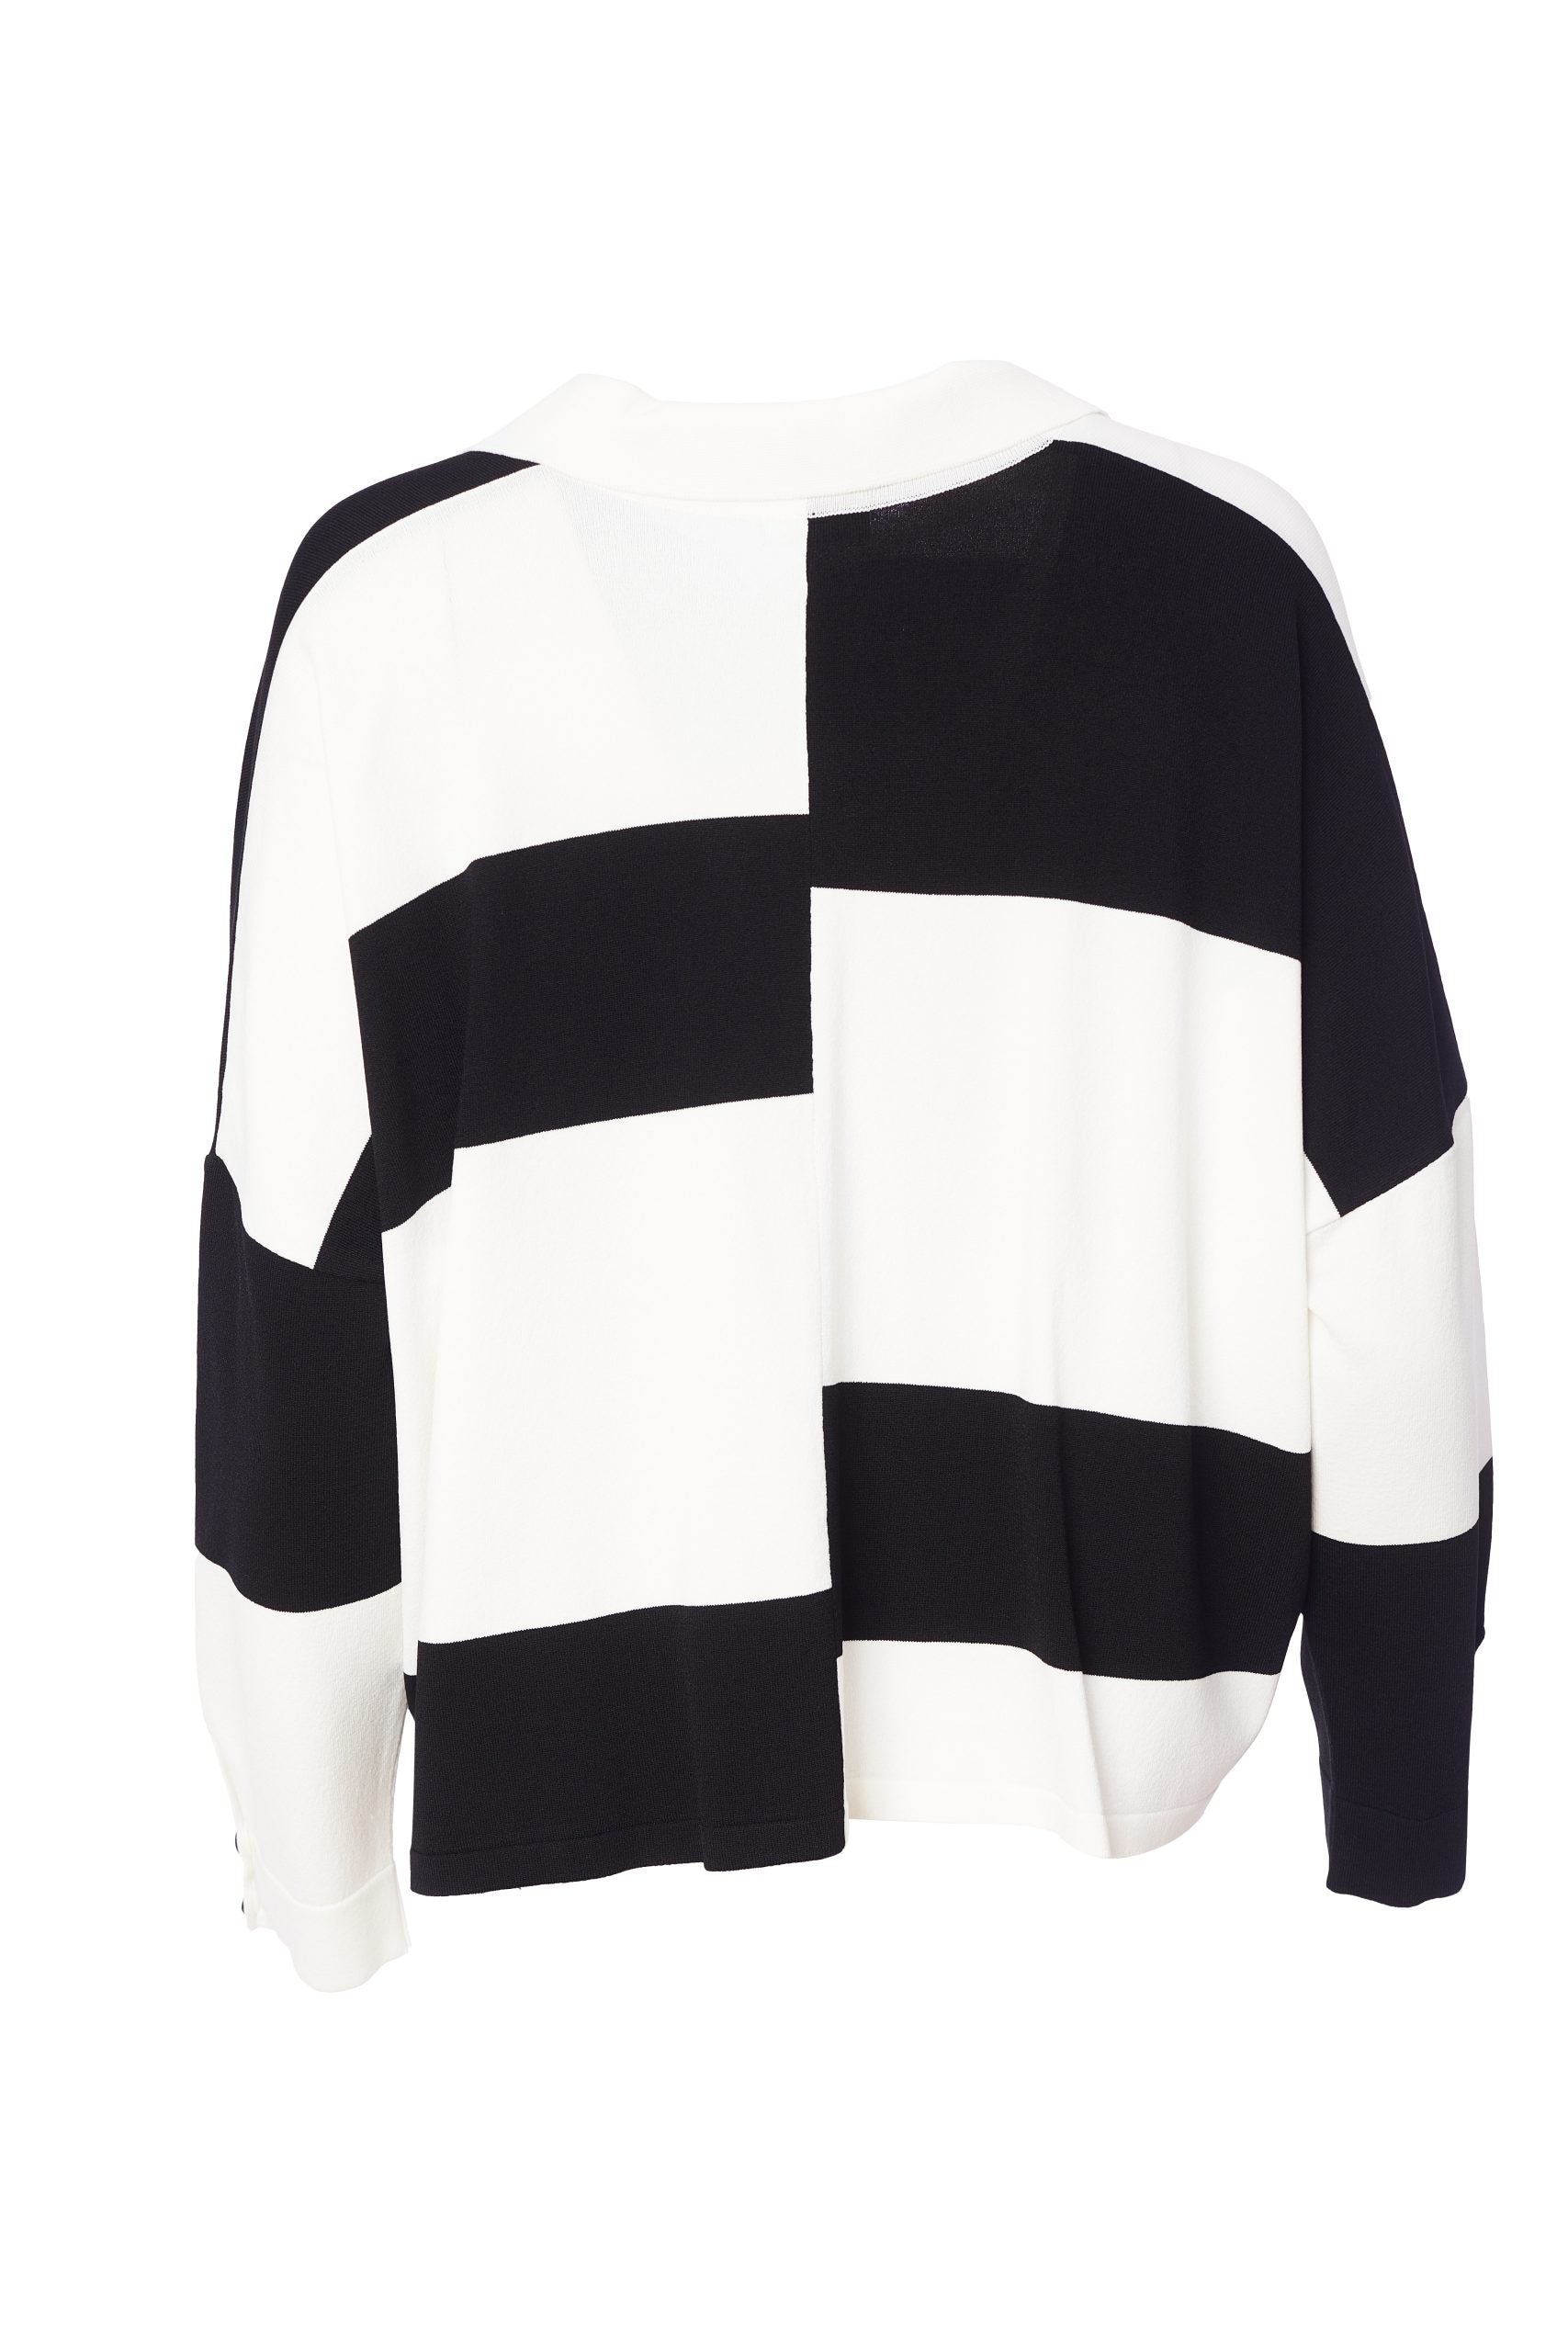 Block Stripe Knit in Black and White